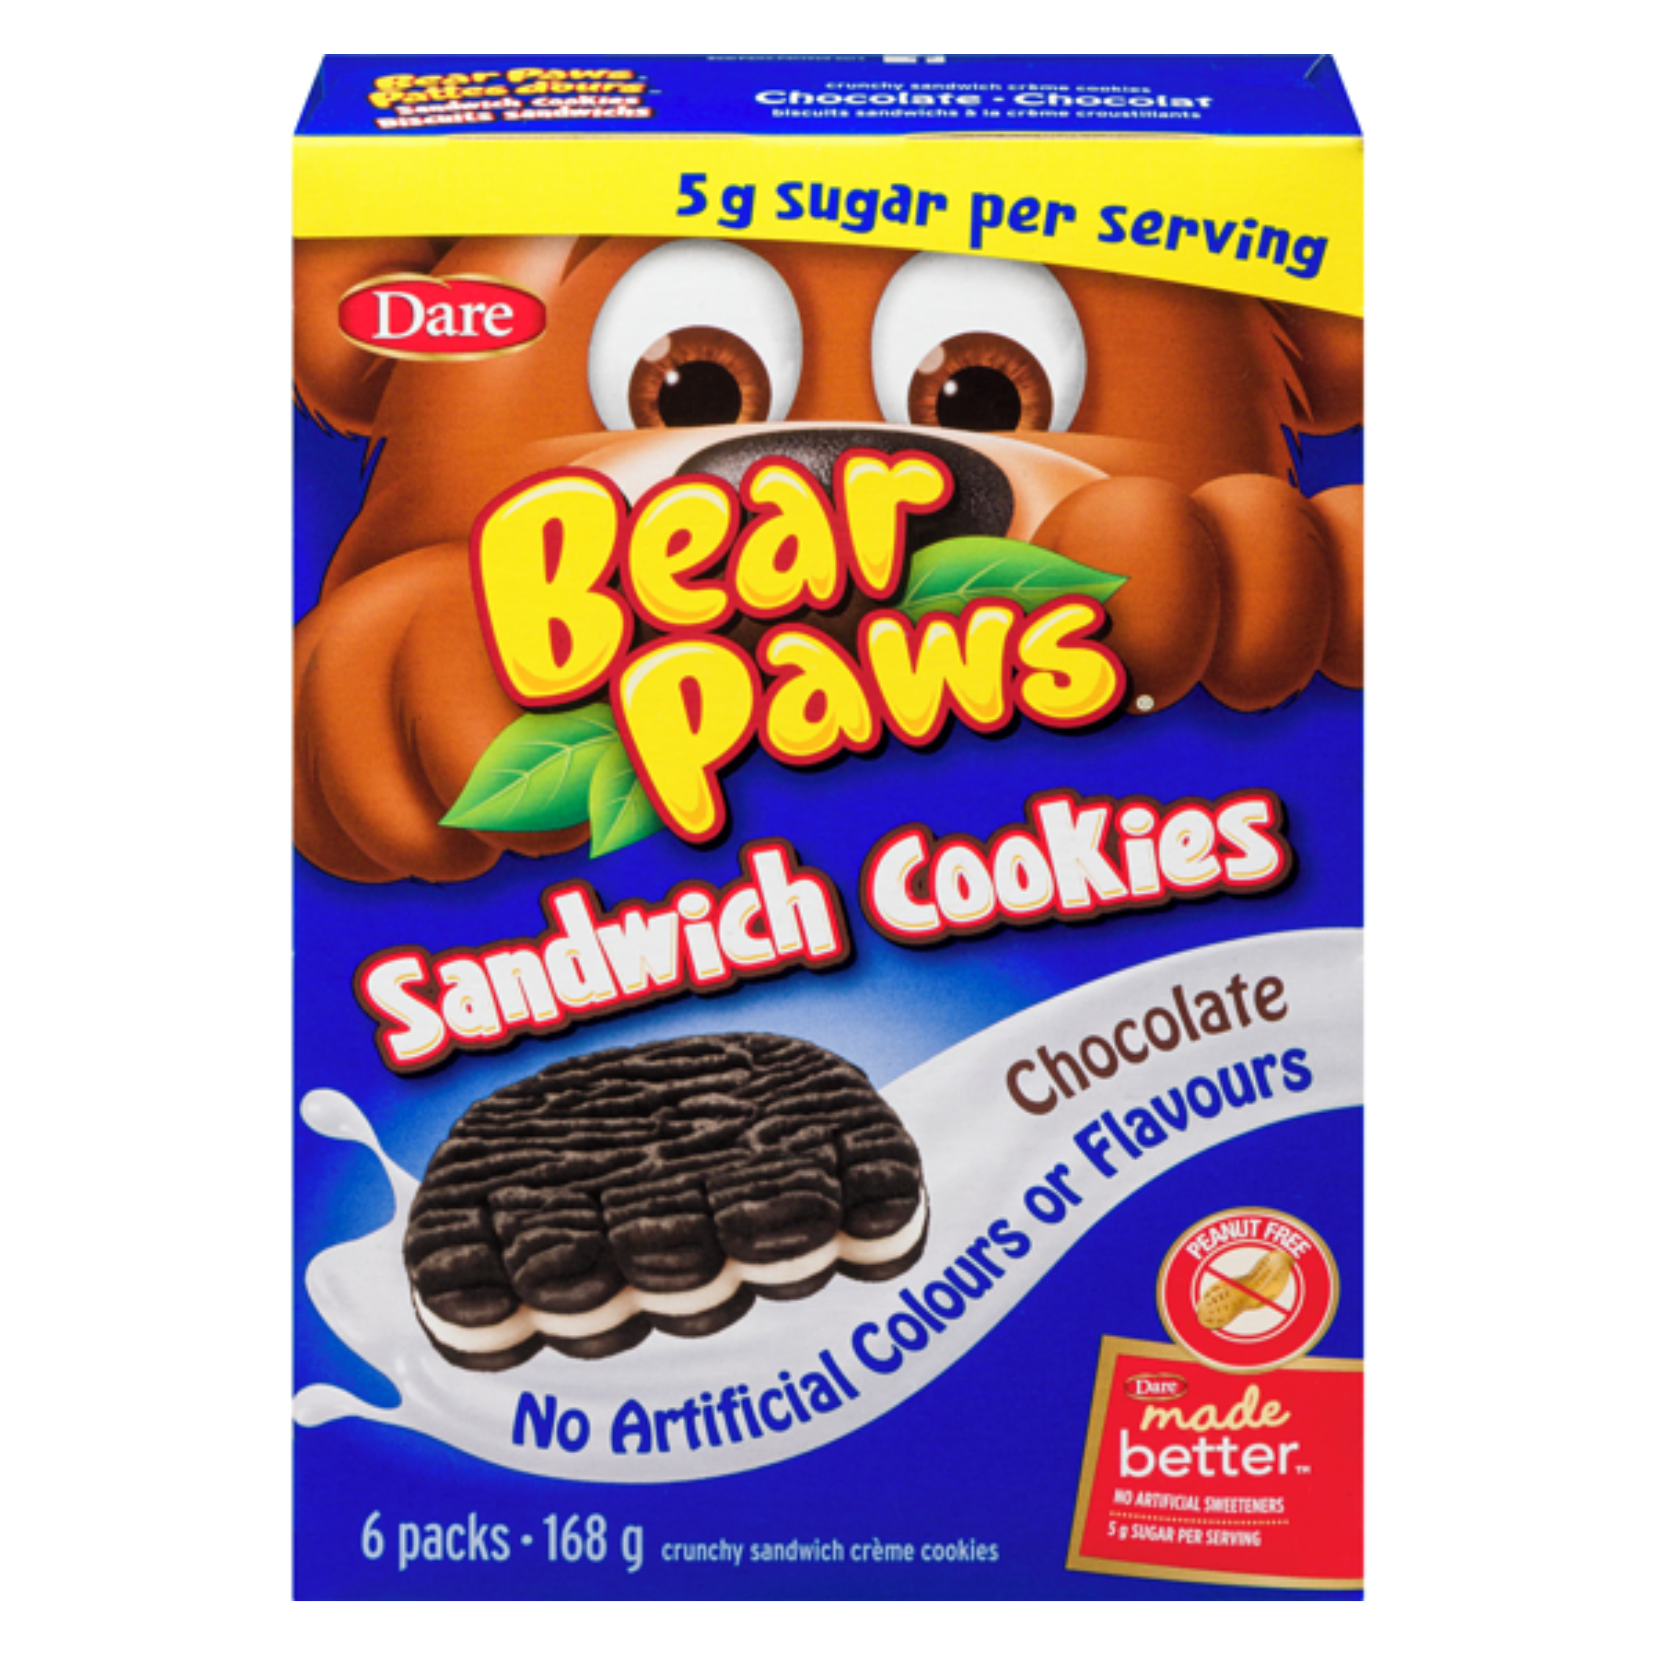 Dare Bear Paws Chocolate Sandwich Cookies 28g x 6